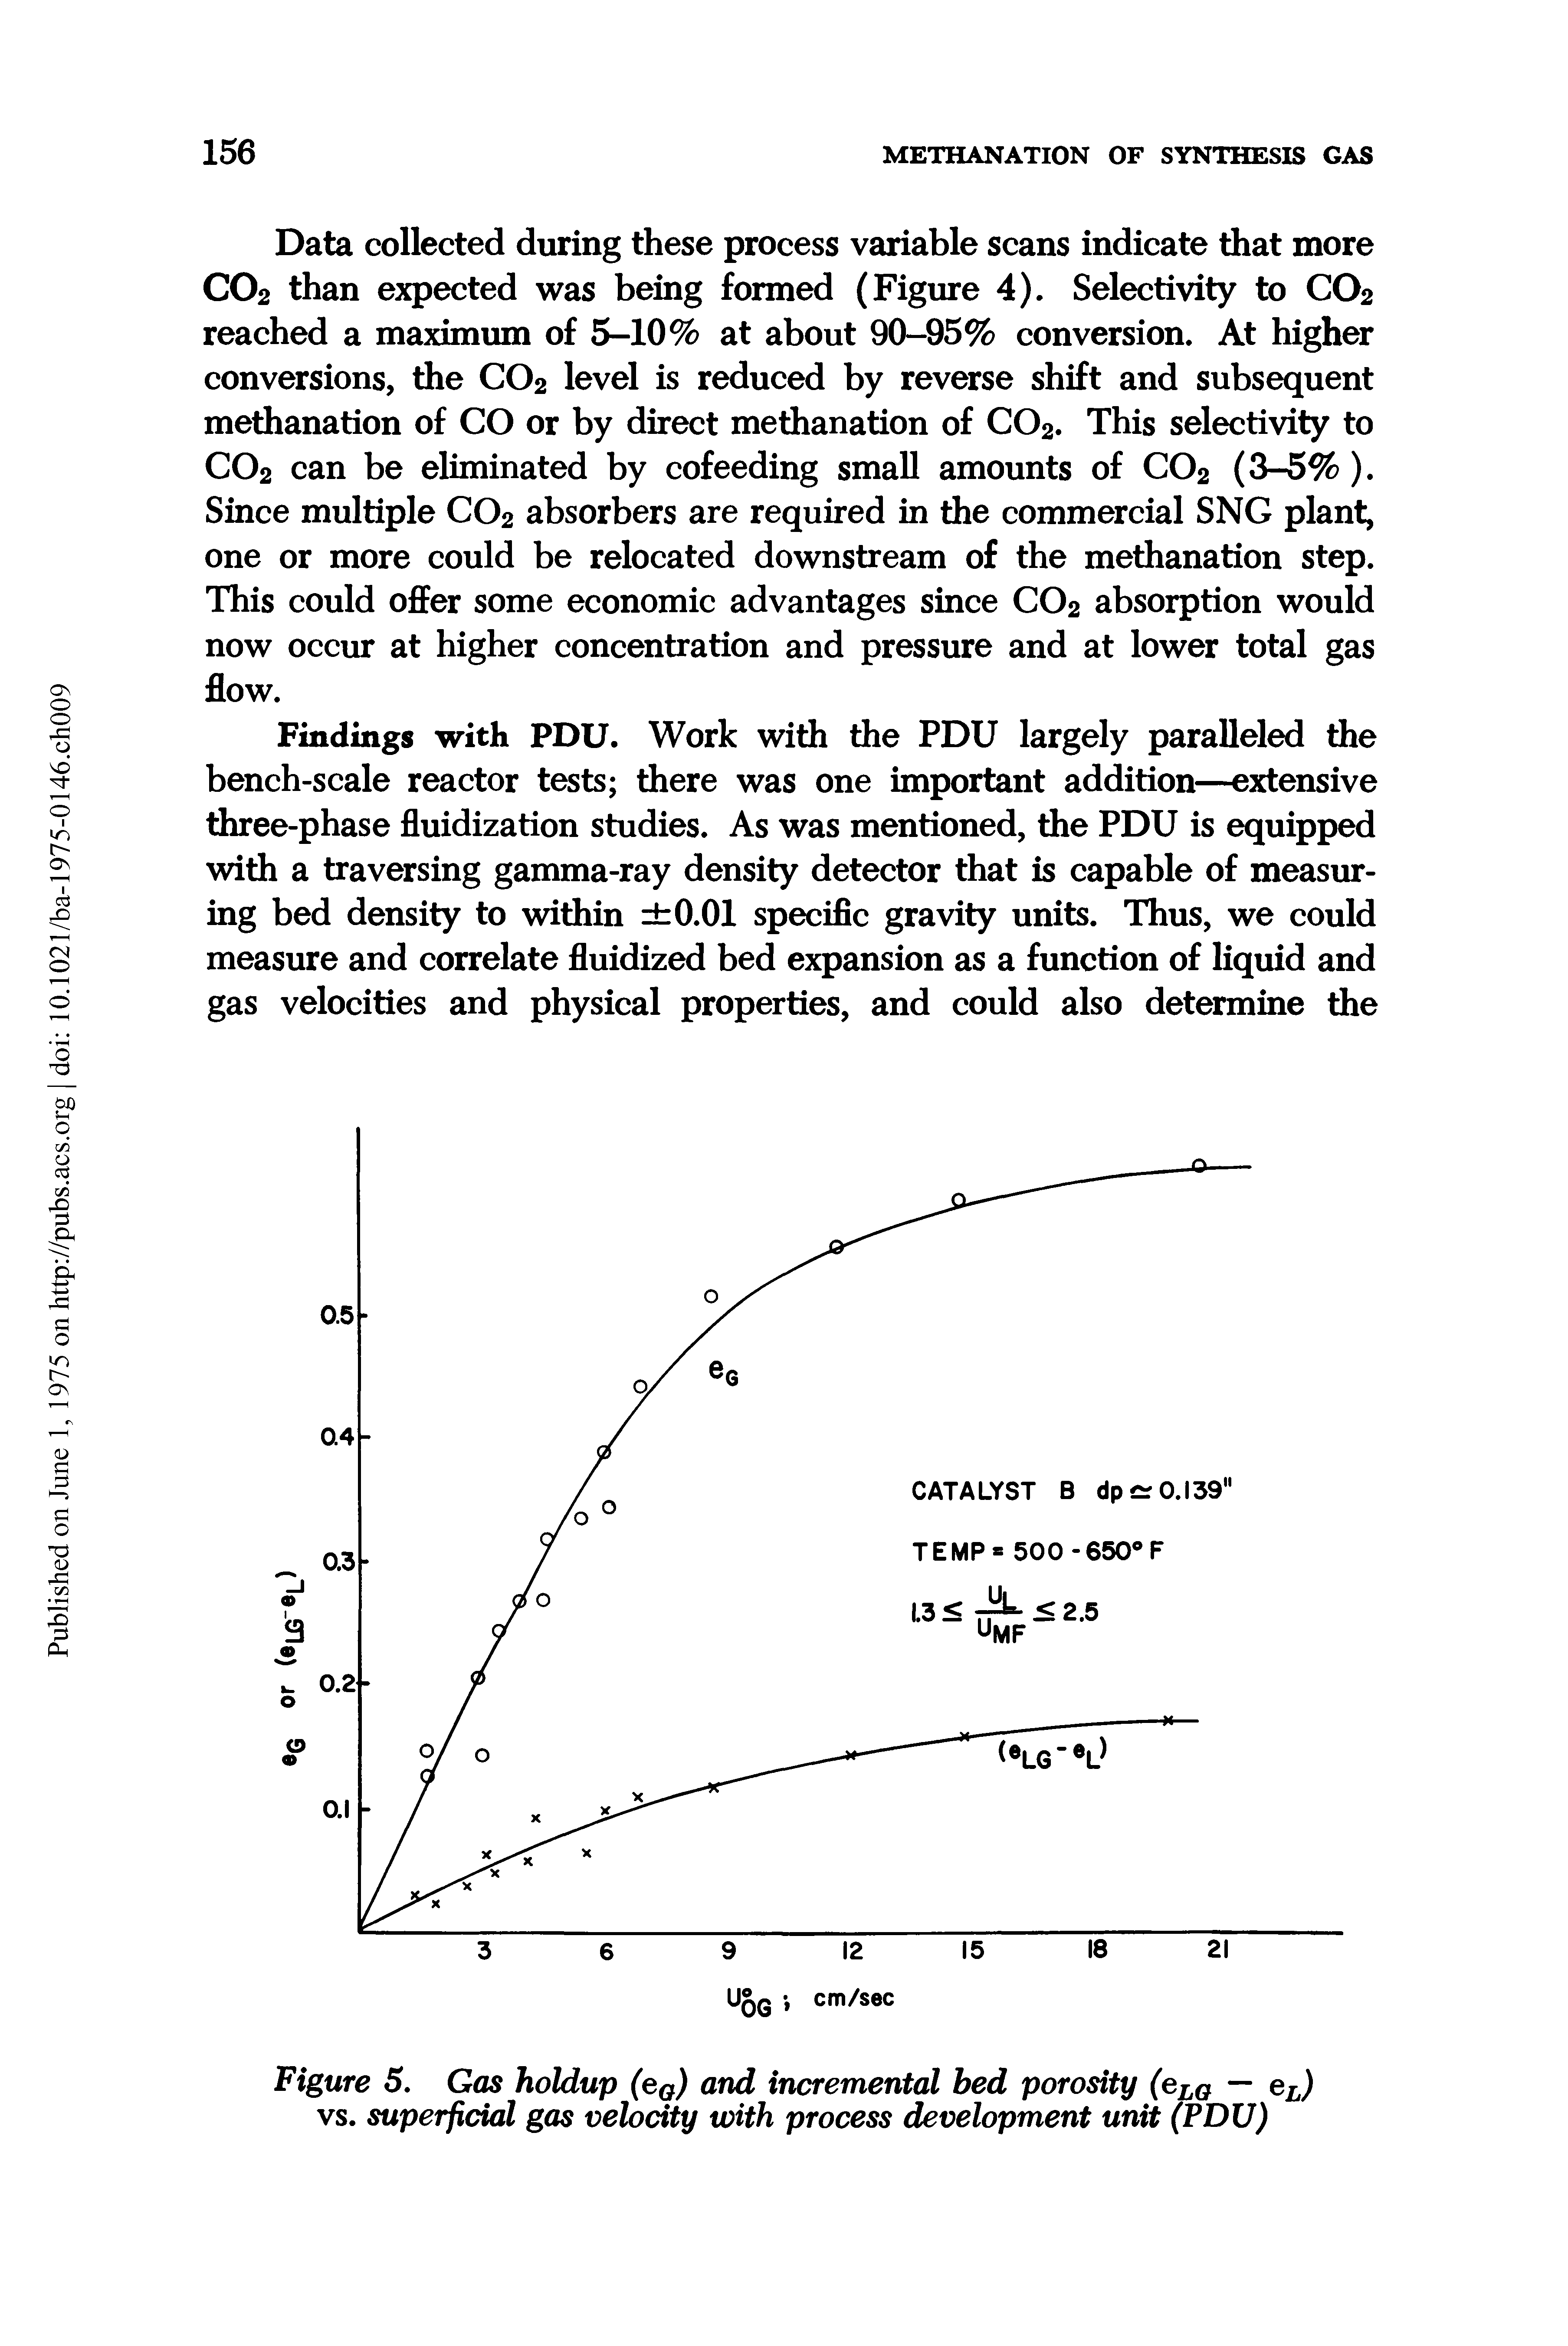 Figure 5. Gas holdup (e0) and incremental bed porosity (eLO — eL) vs. superficial gas velocity with process development unit (PDU)...